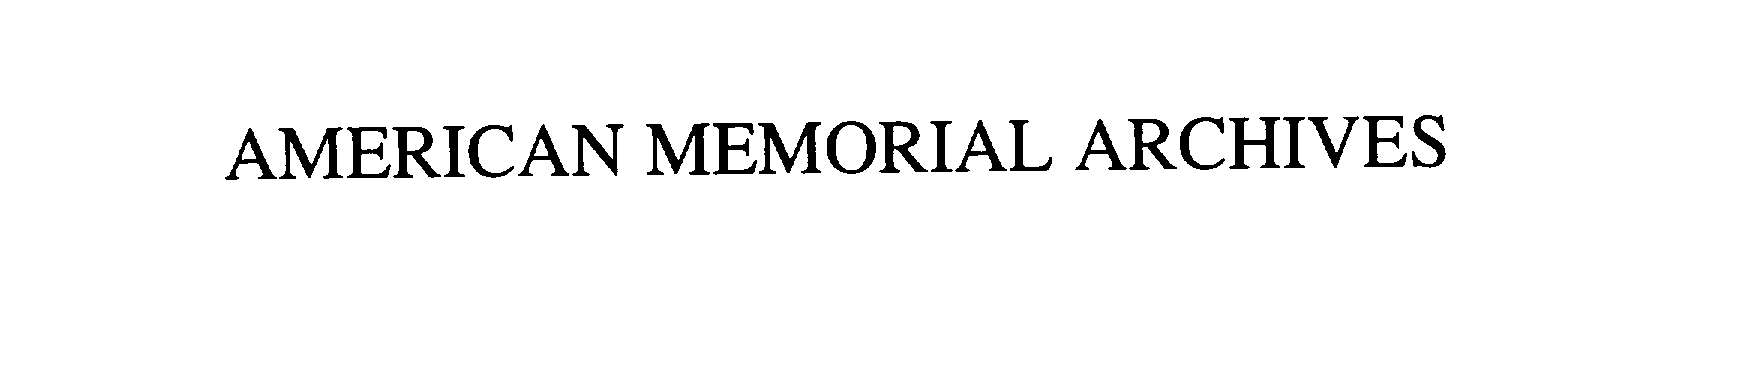  AMERICAN MEMORIAL ARCHIVES